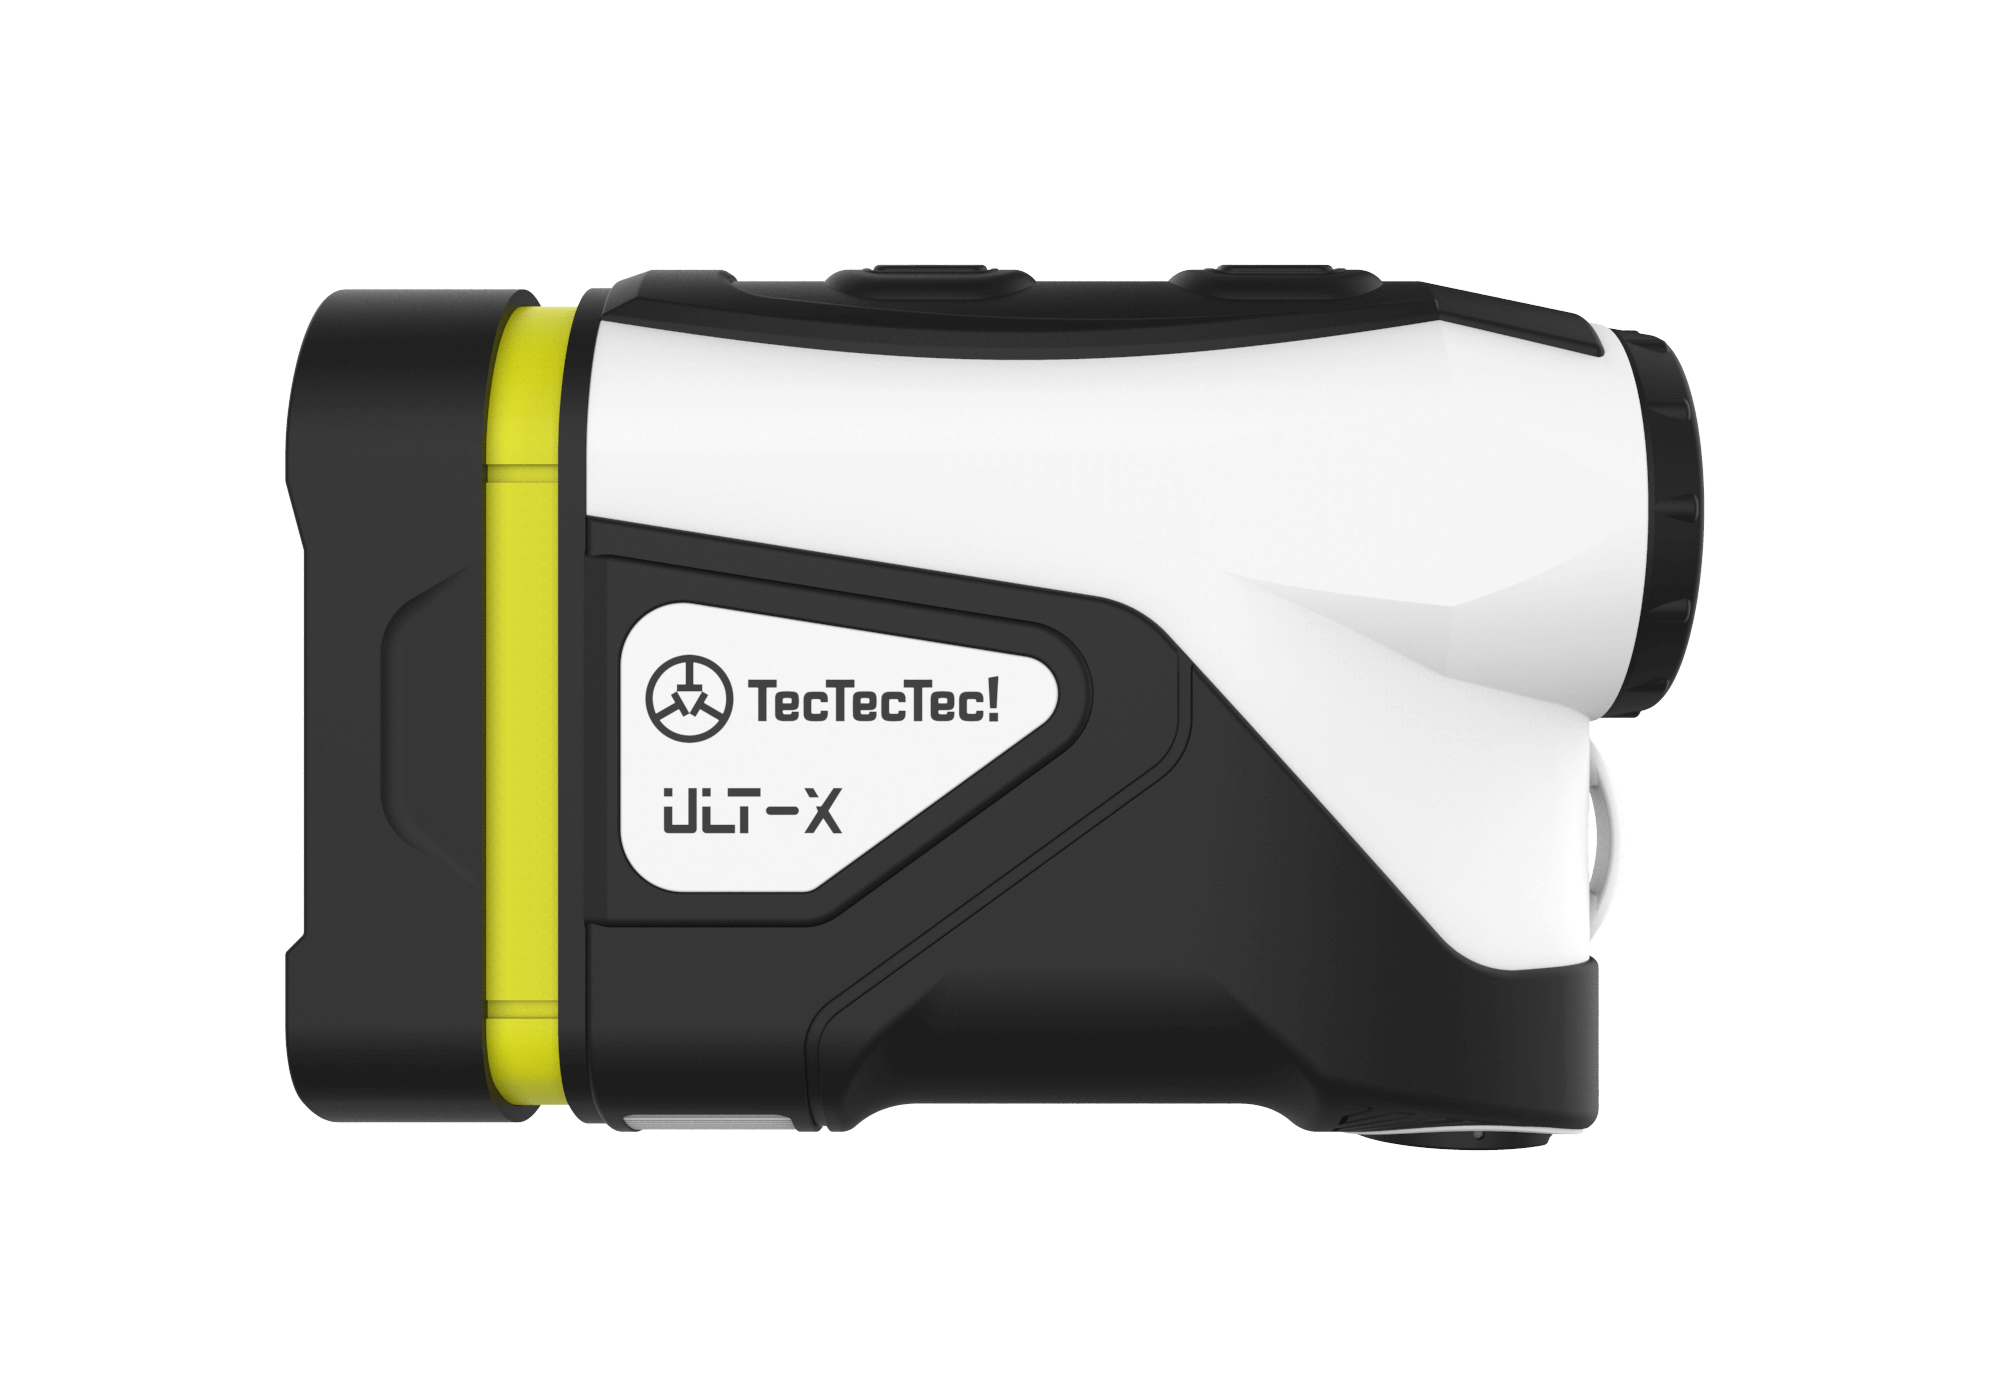 Rangefinder ULT-X TecTecTec Golf - Laser measurement up to 1000 yd